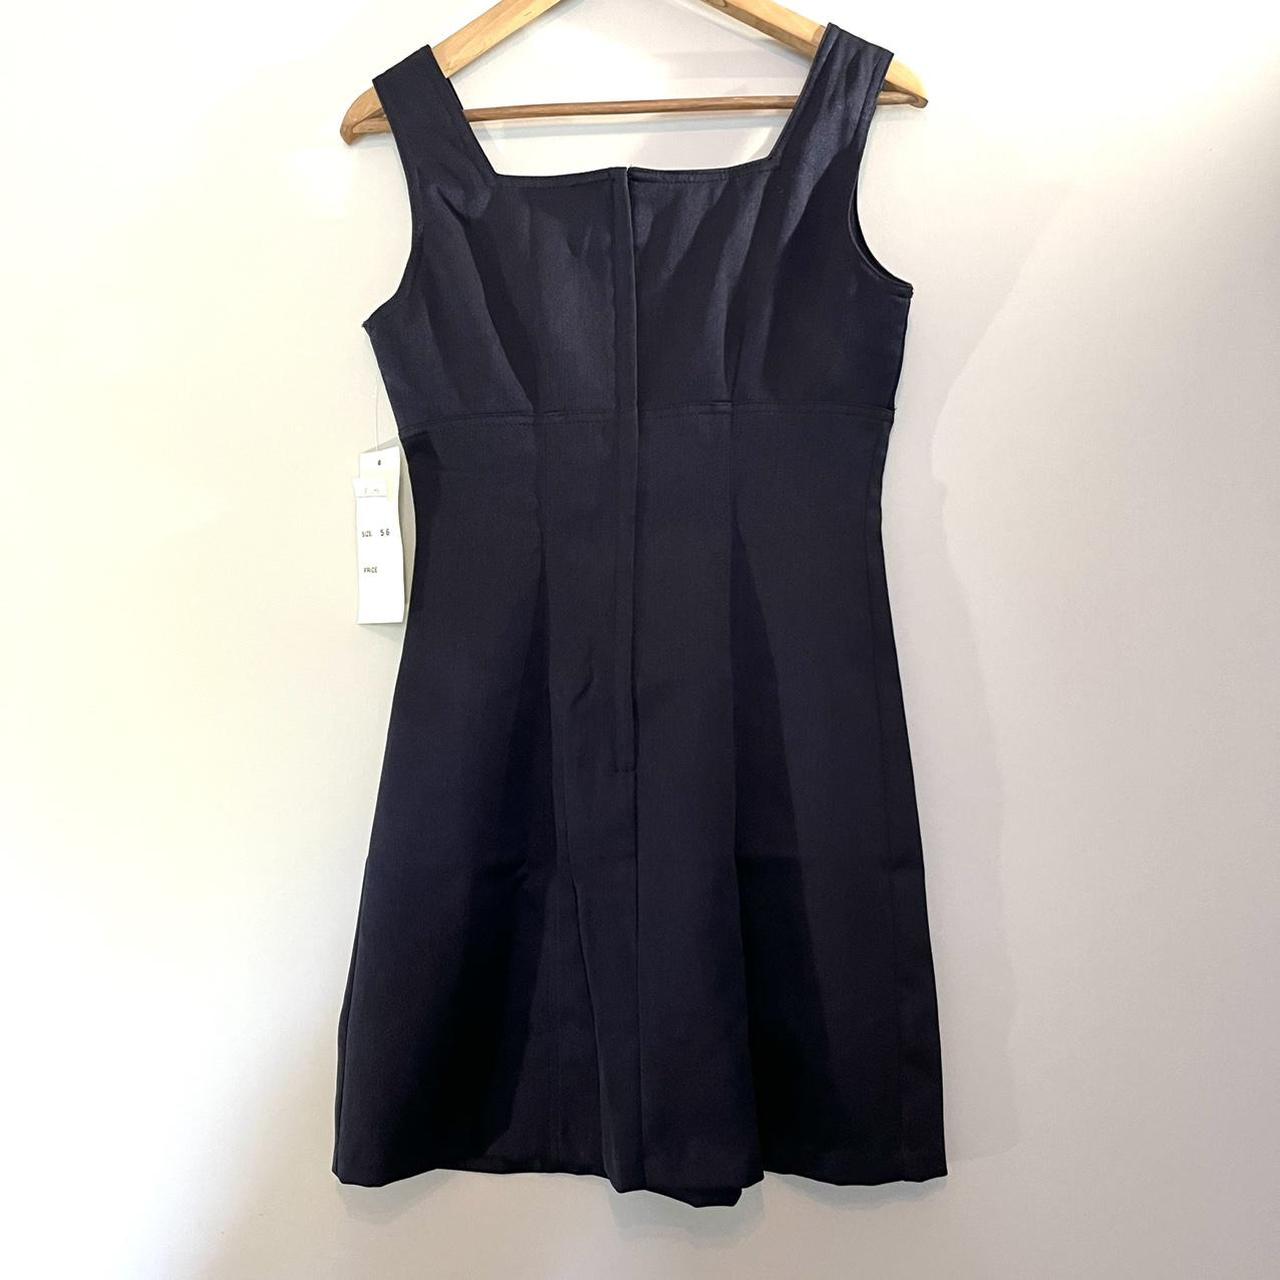 🌻Very cute deadstock 90s vintage navy blue dress.... - Depop